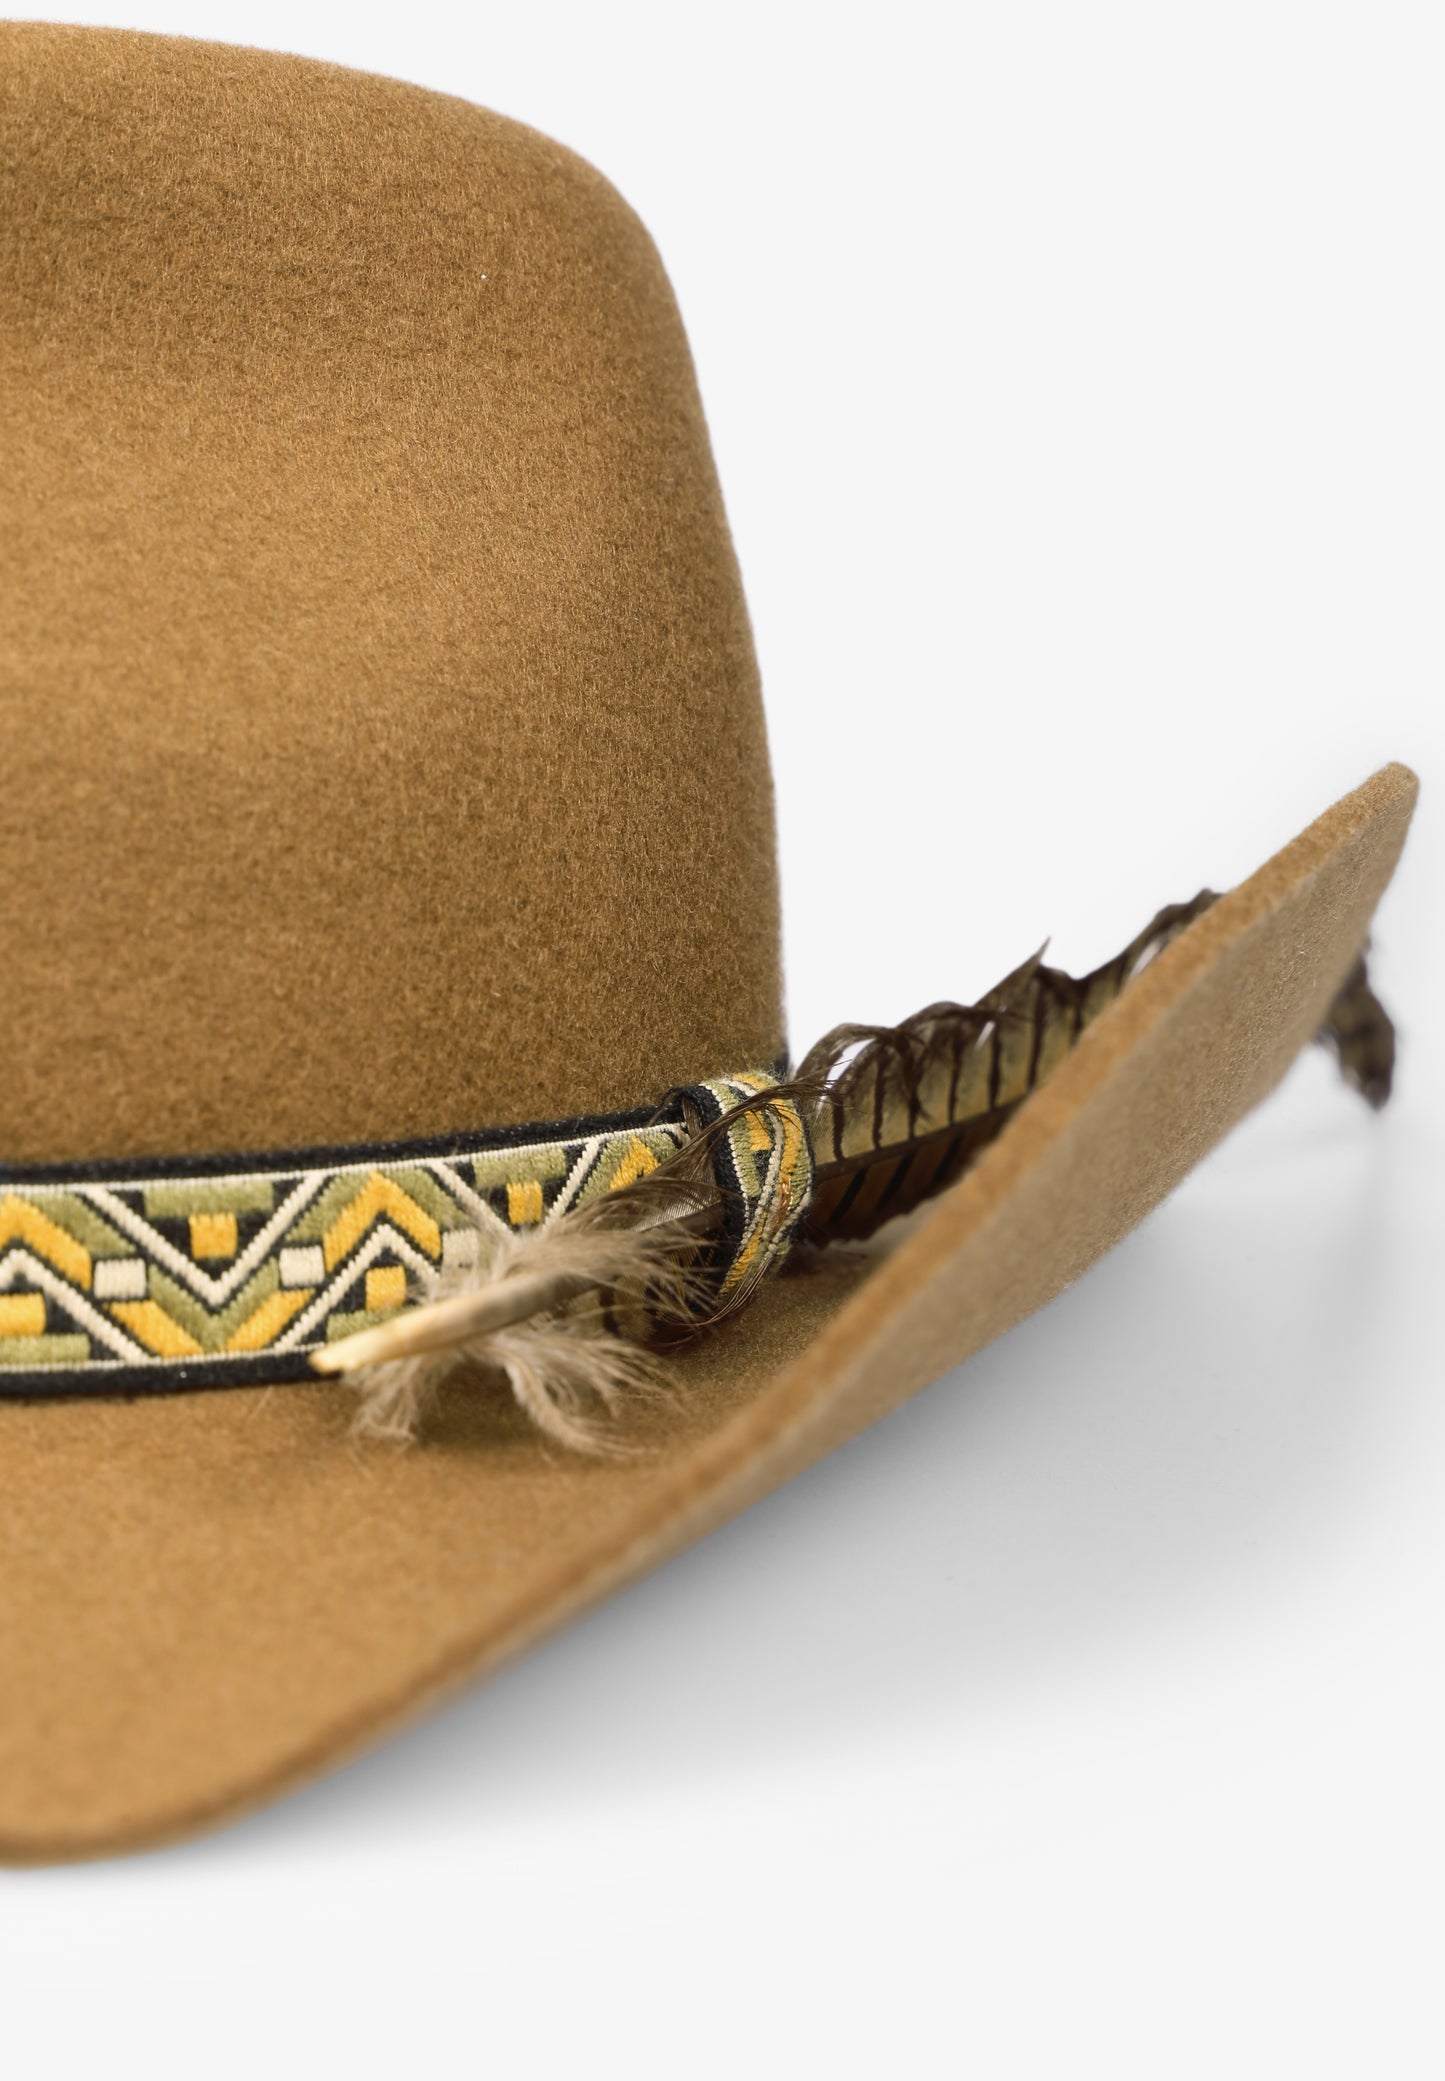 MONRREAL HATS | SOMBRERO THE RODEO COWBOY 2.0